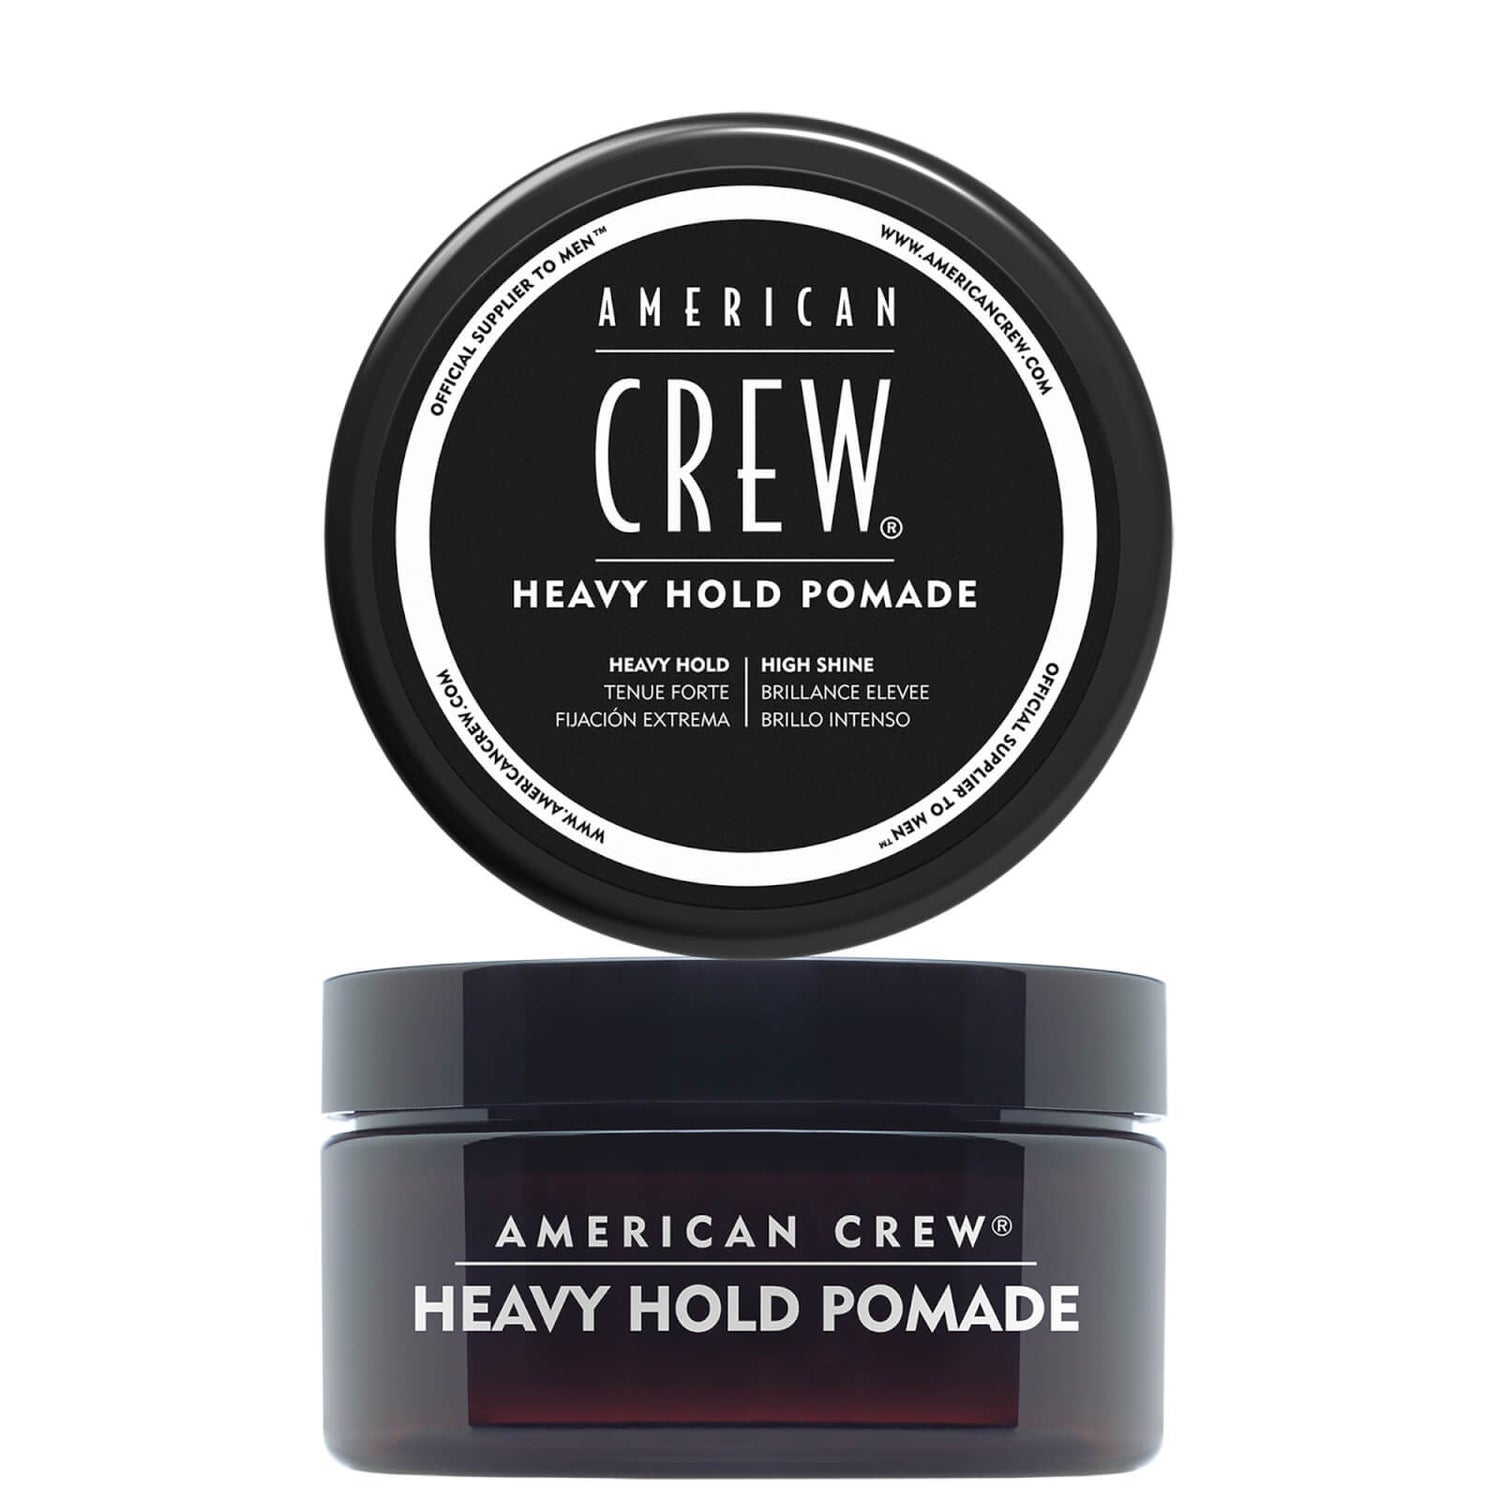 American Crew Heavy Hold Pomade 美國隊員 男士強力定型髮蠟(強力定型和高度光澤) 85g